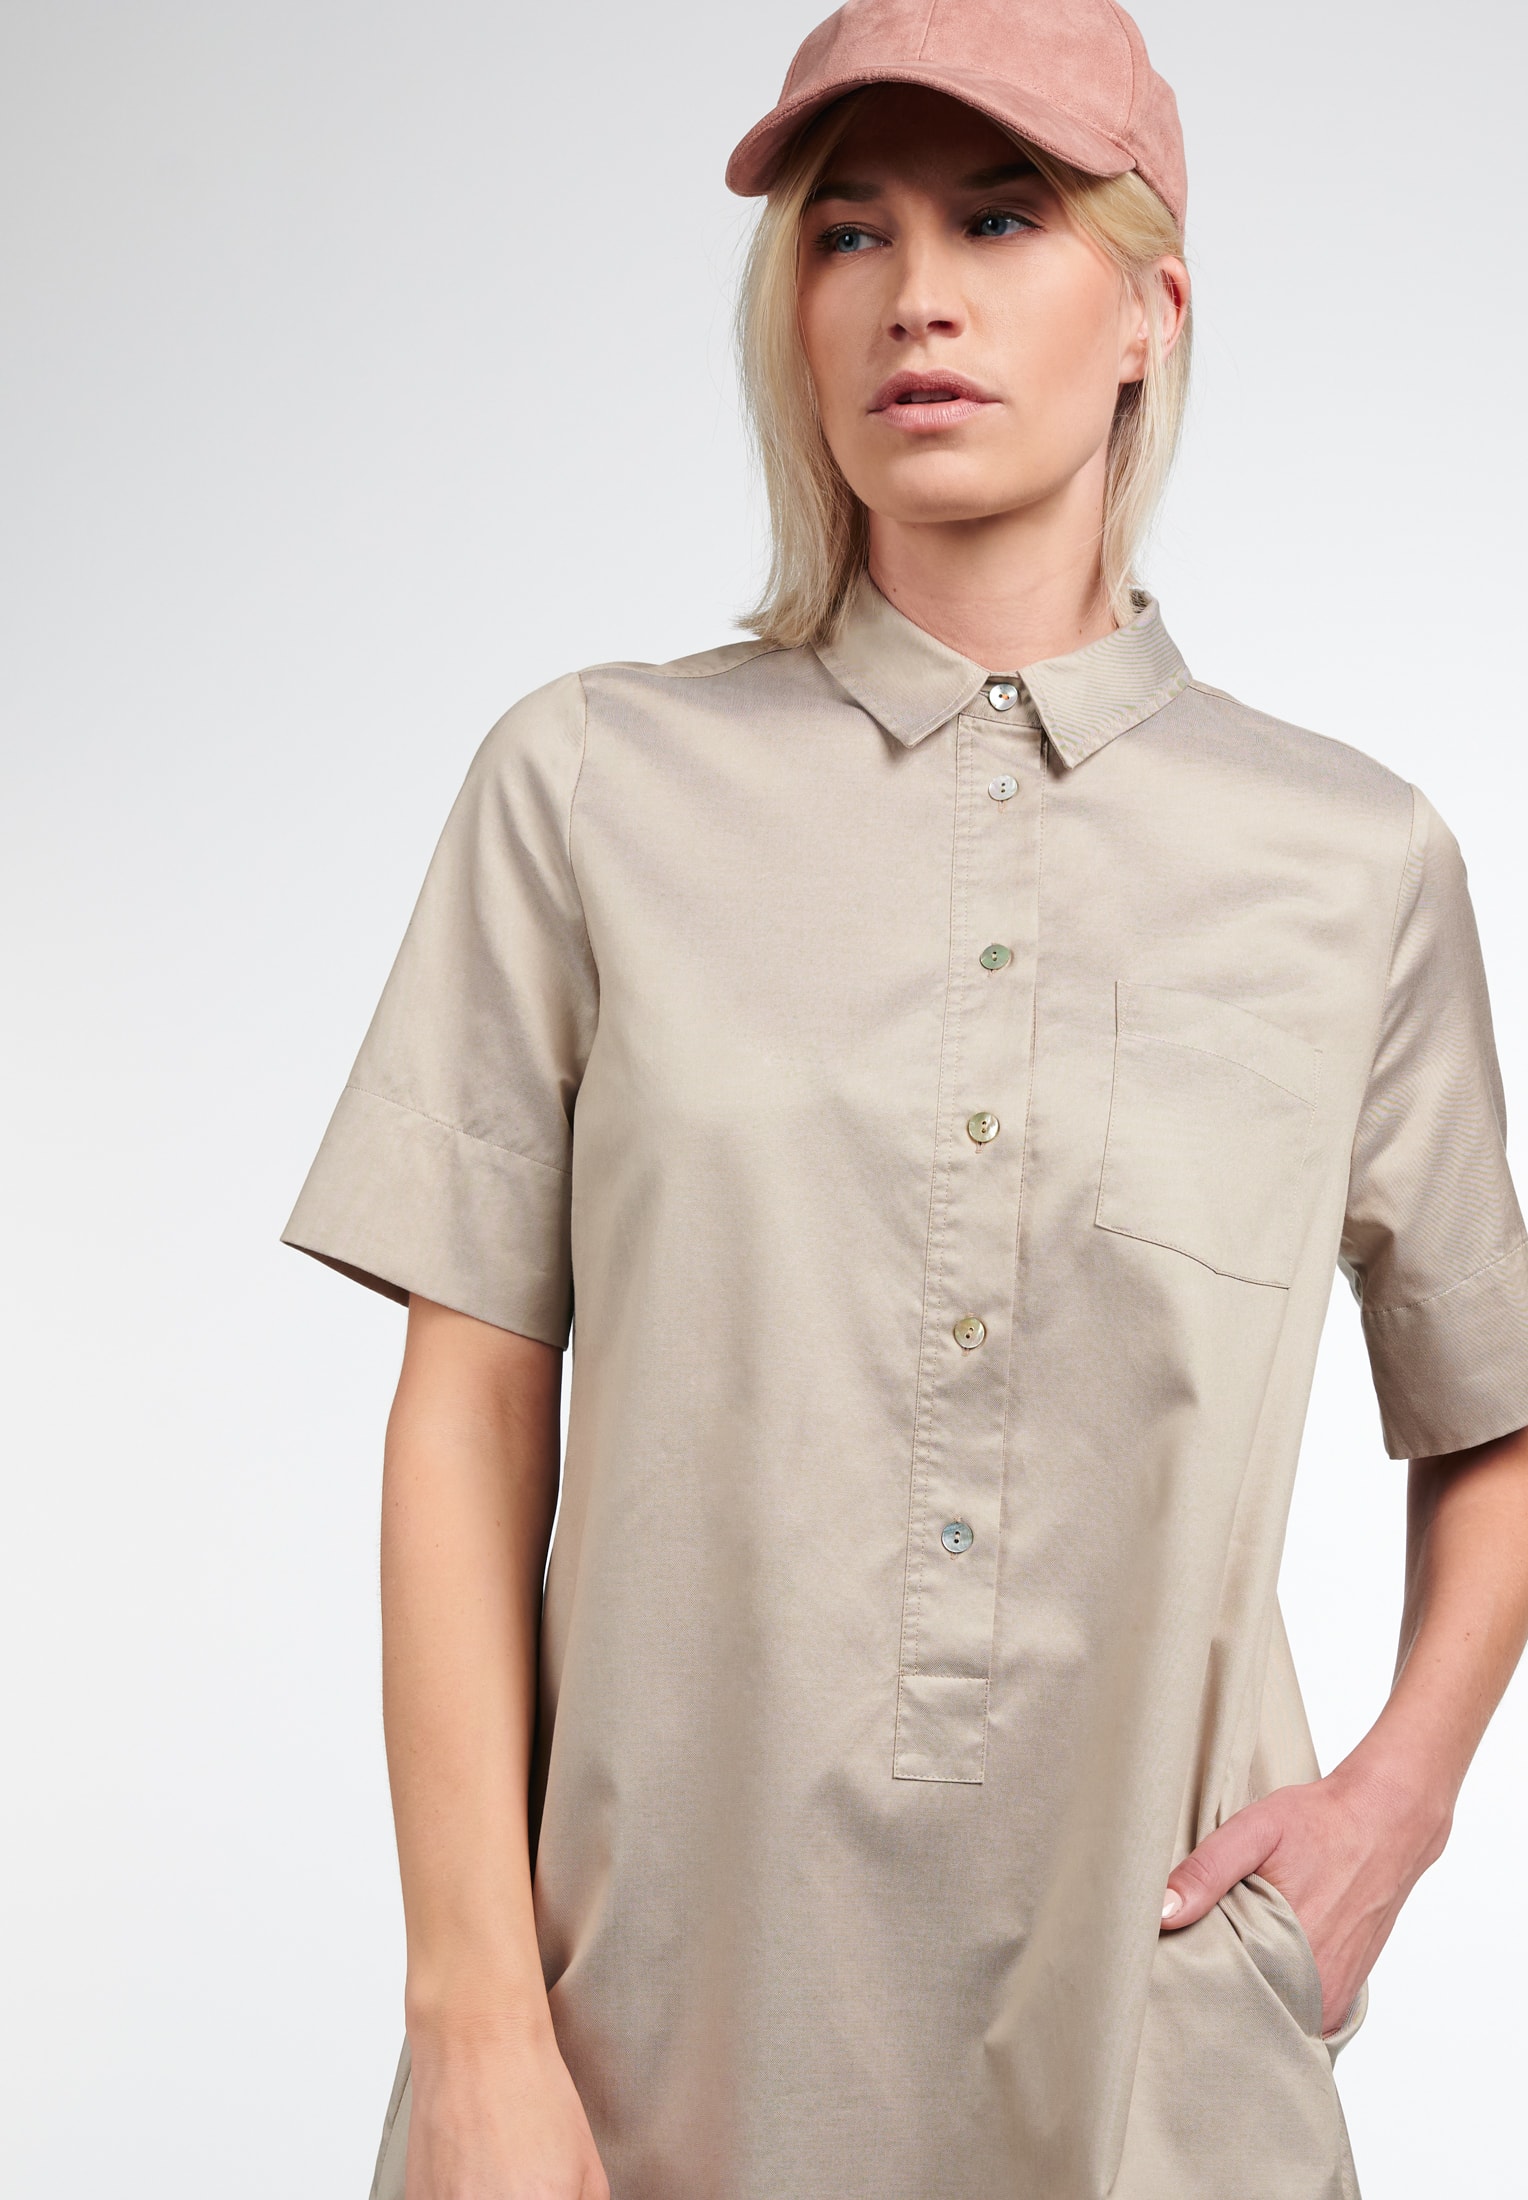 Soft Luxury Shirt Bluse | | 42 in | grün Kurzarm 2DR00234-04-01-42-1/2 | grün unifarben